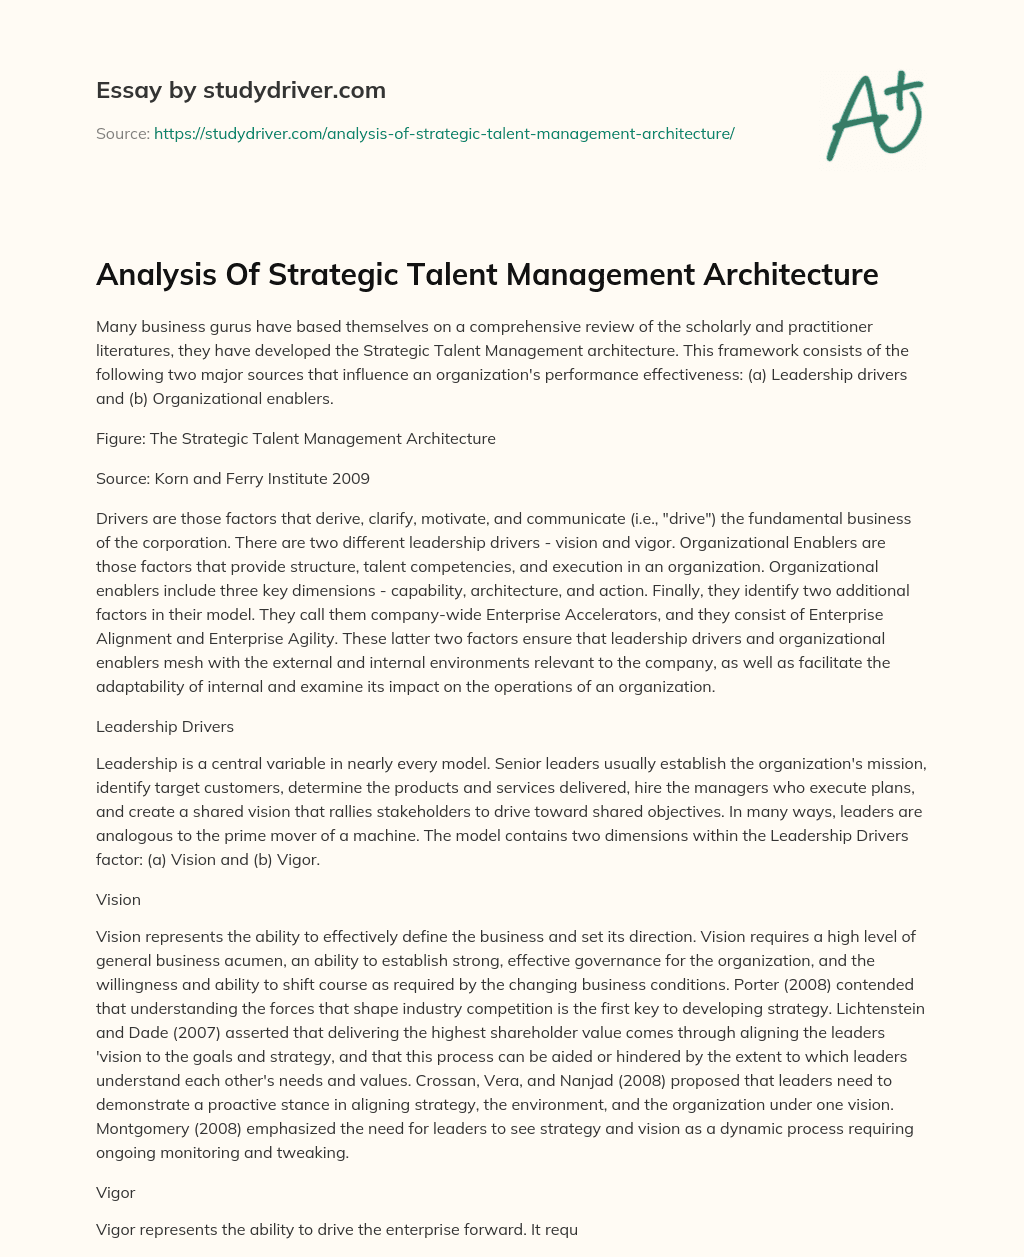 Analysis of Strategic Talent Management Architecture essay